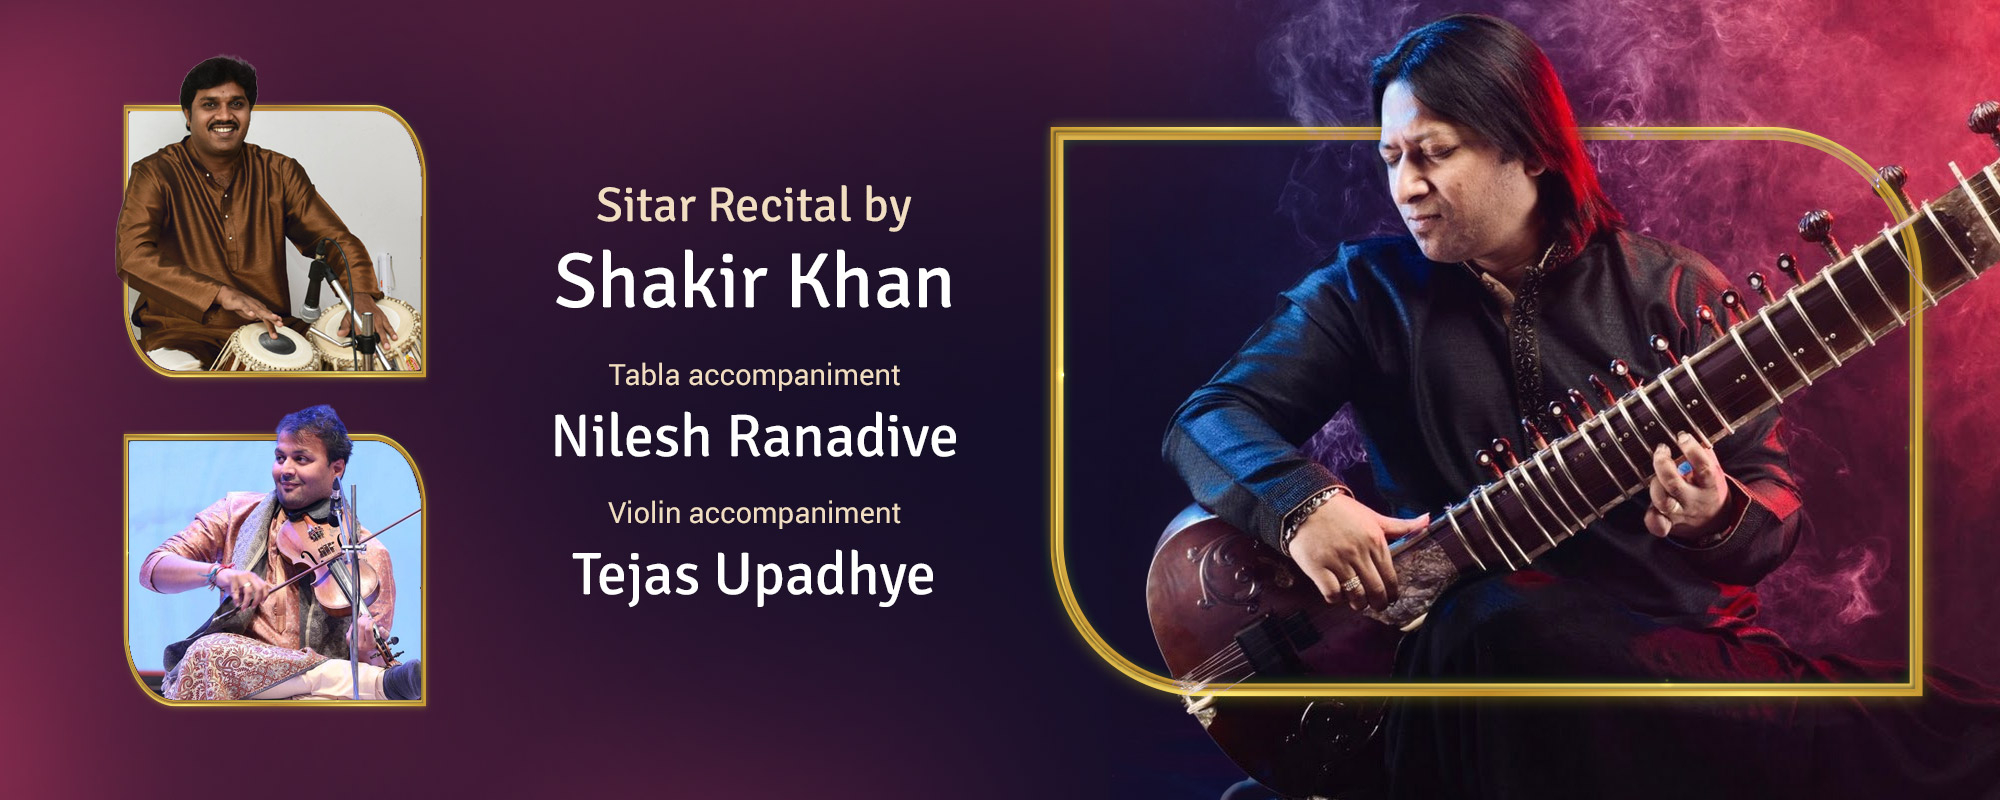 Shakir Khan with Tejas Upadhye Concert